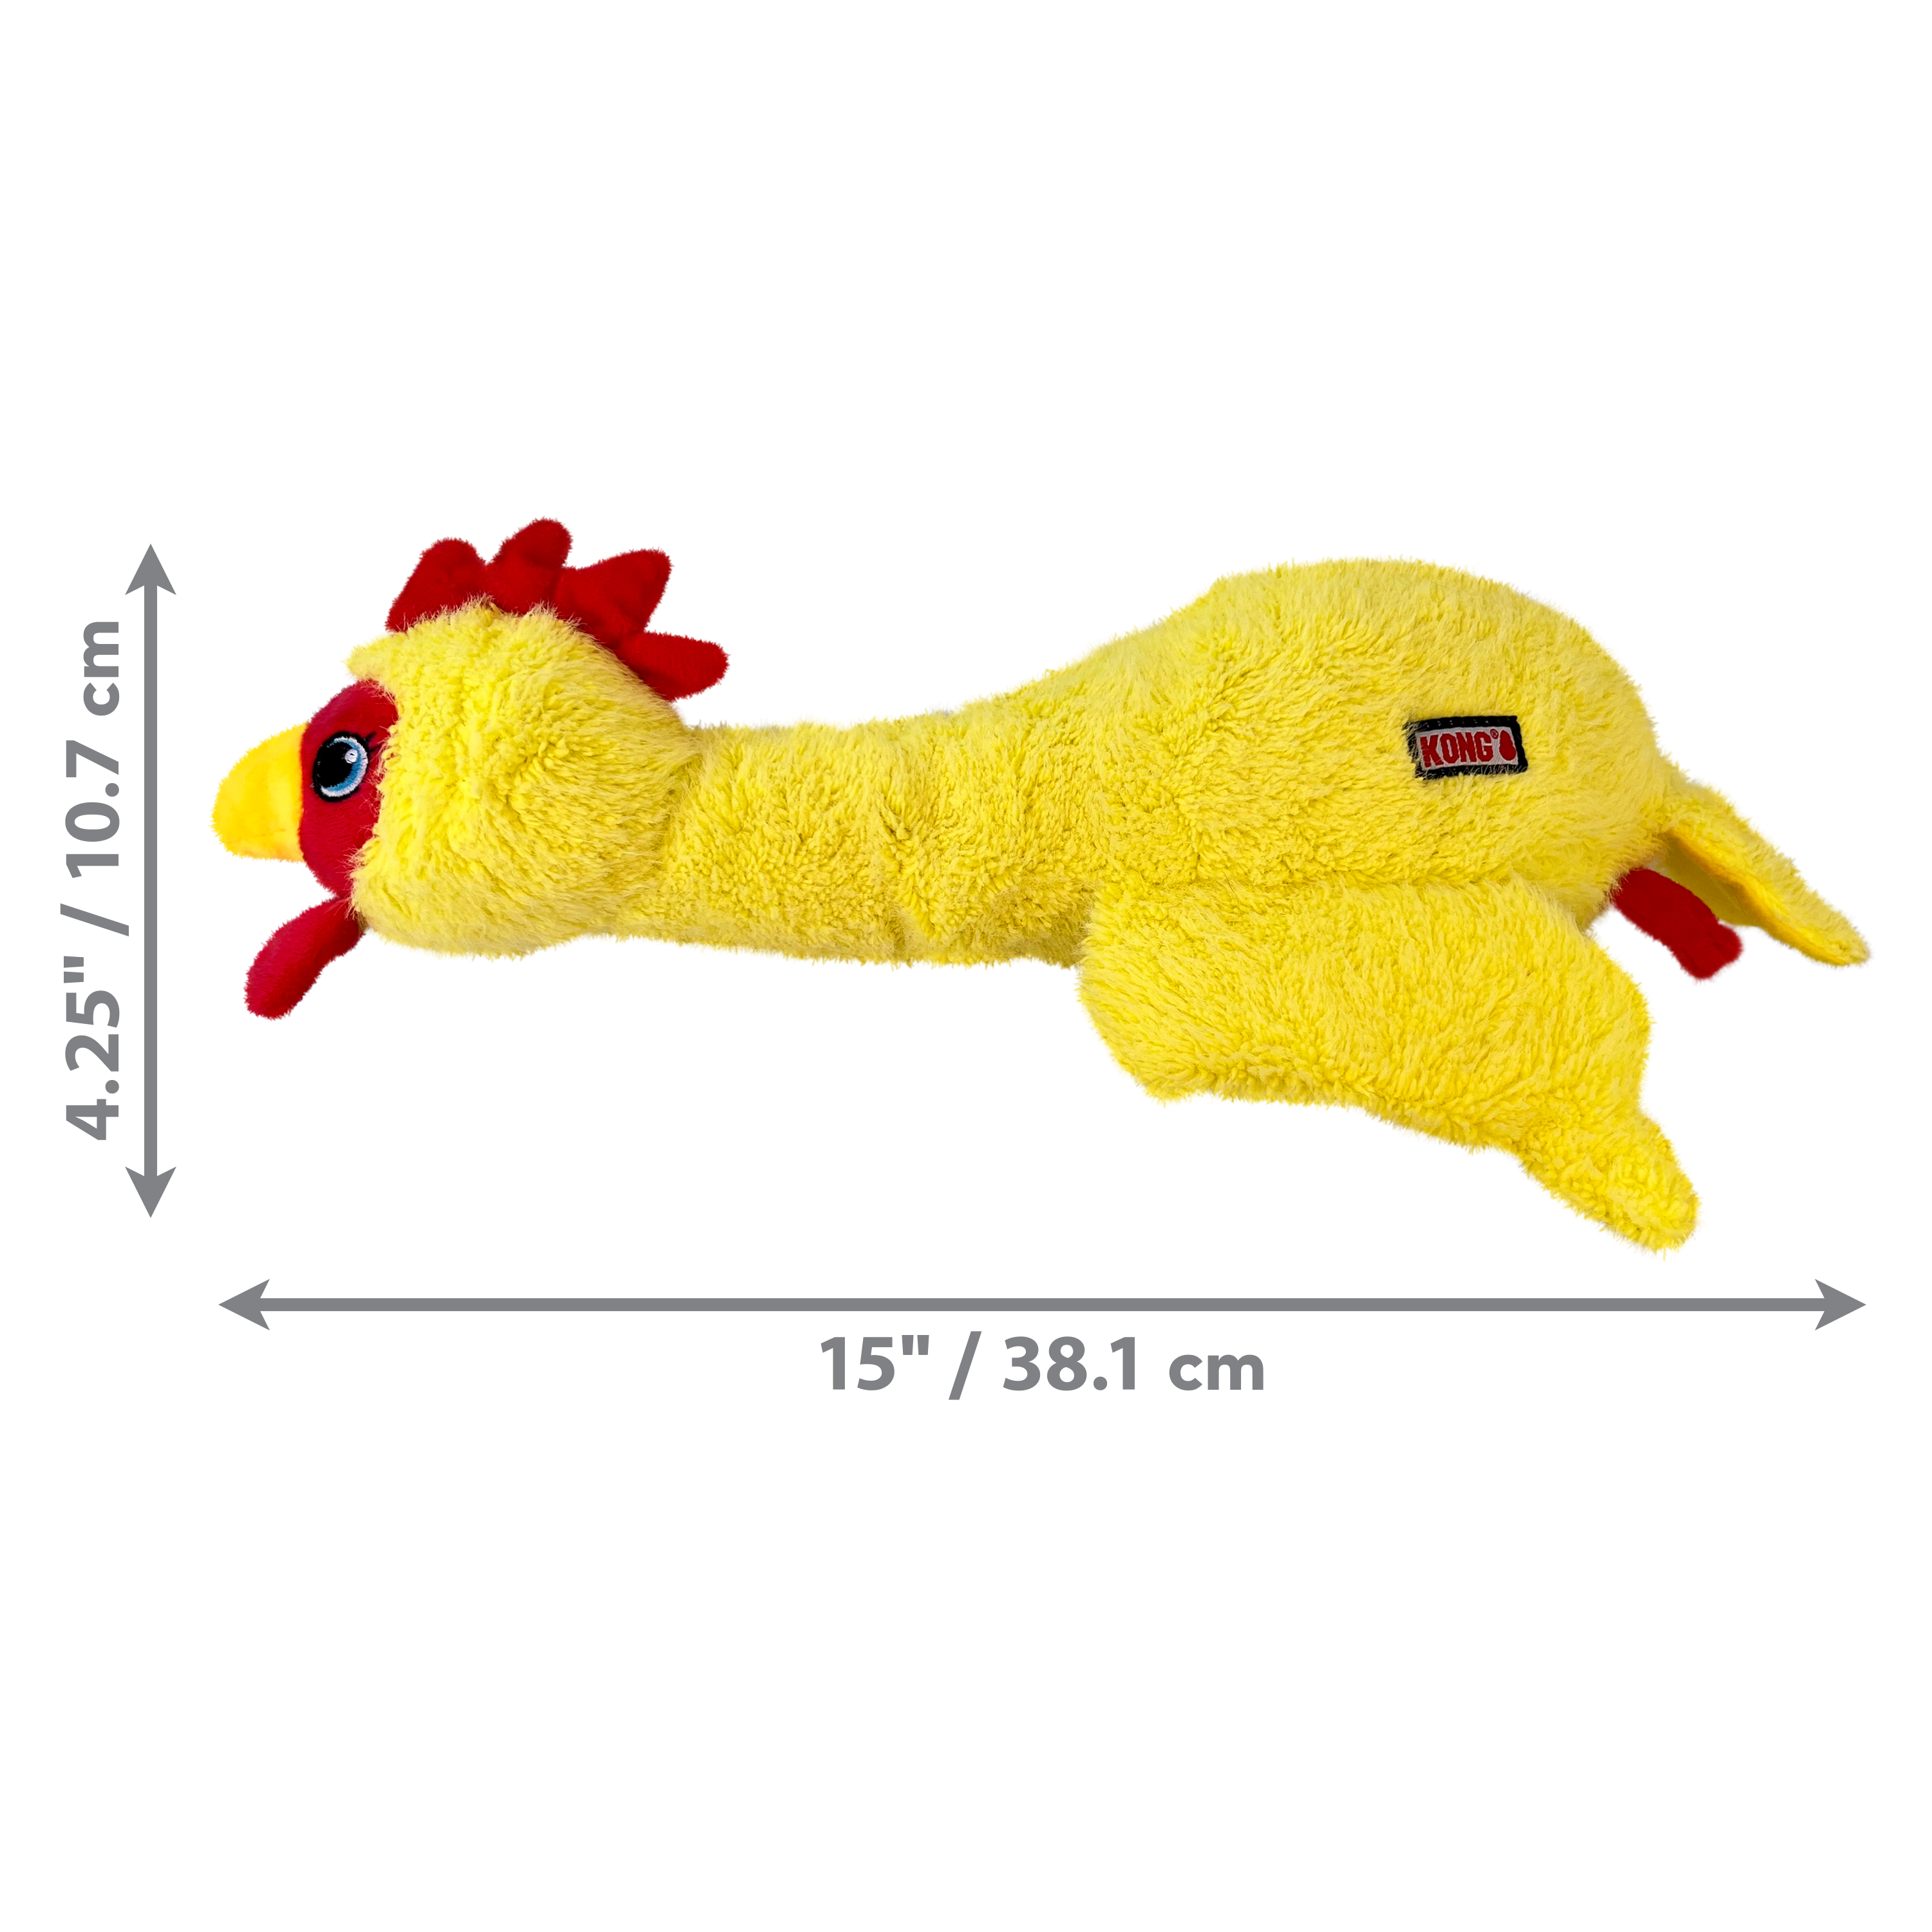 Imagem do produto Scruffs Chicken dimoffpack